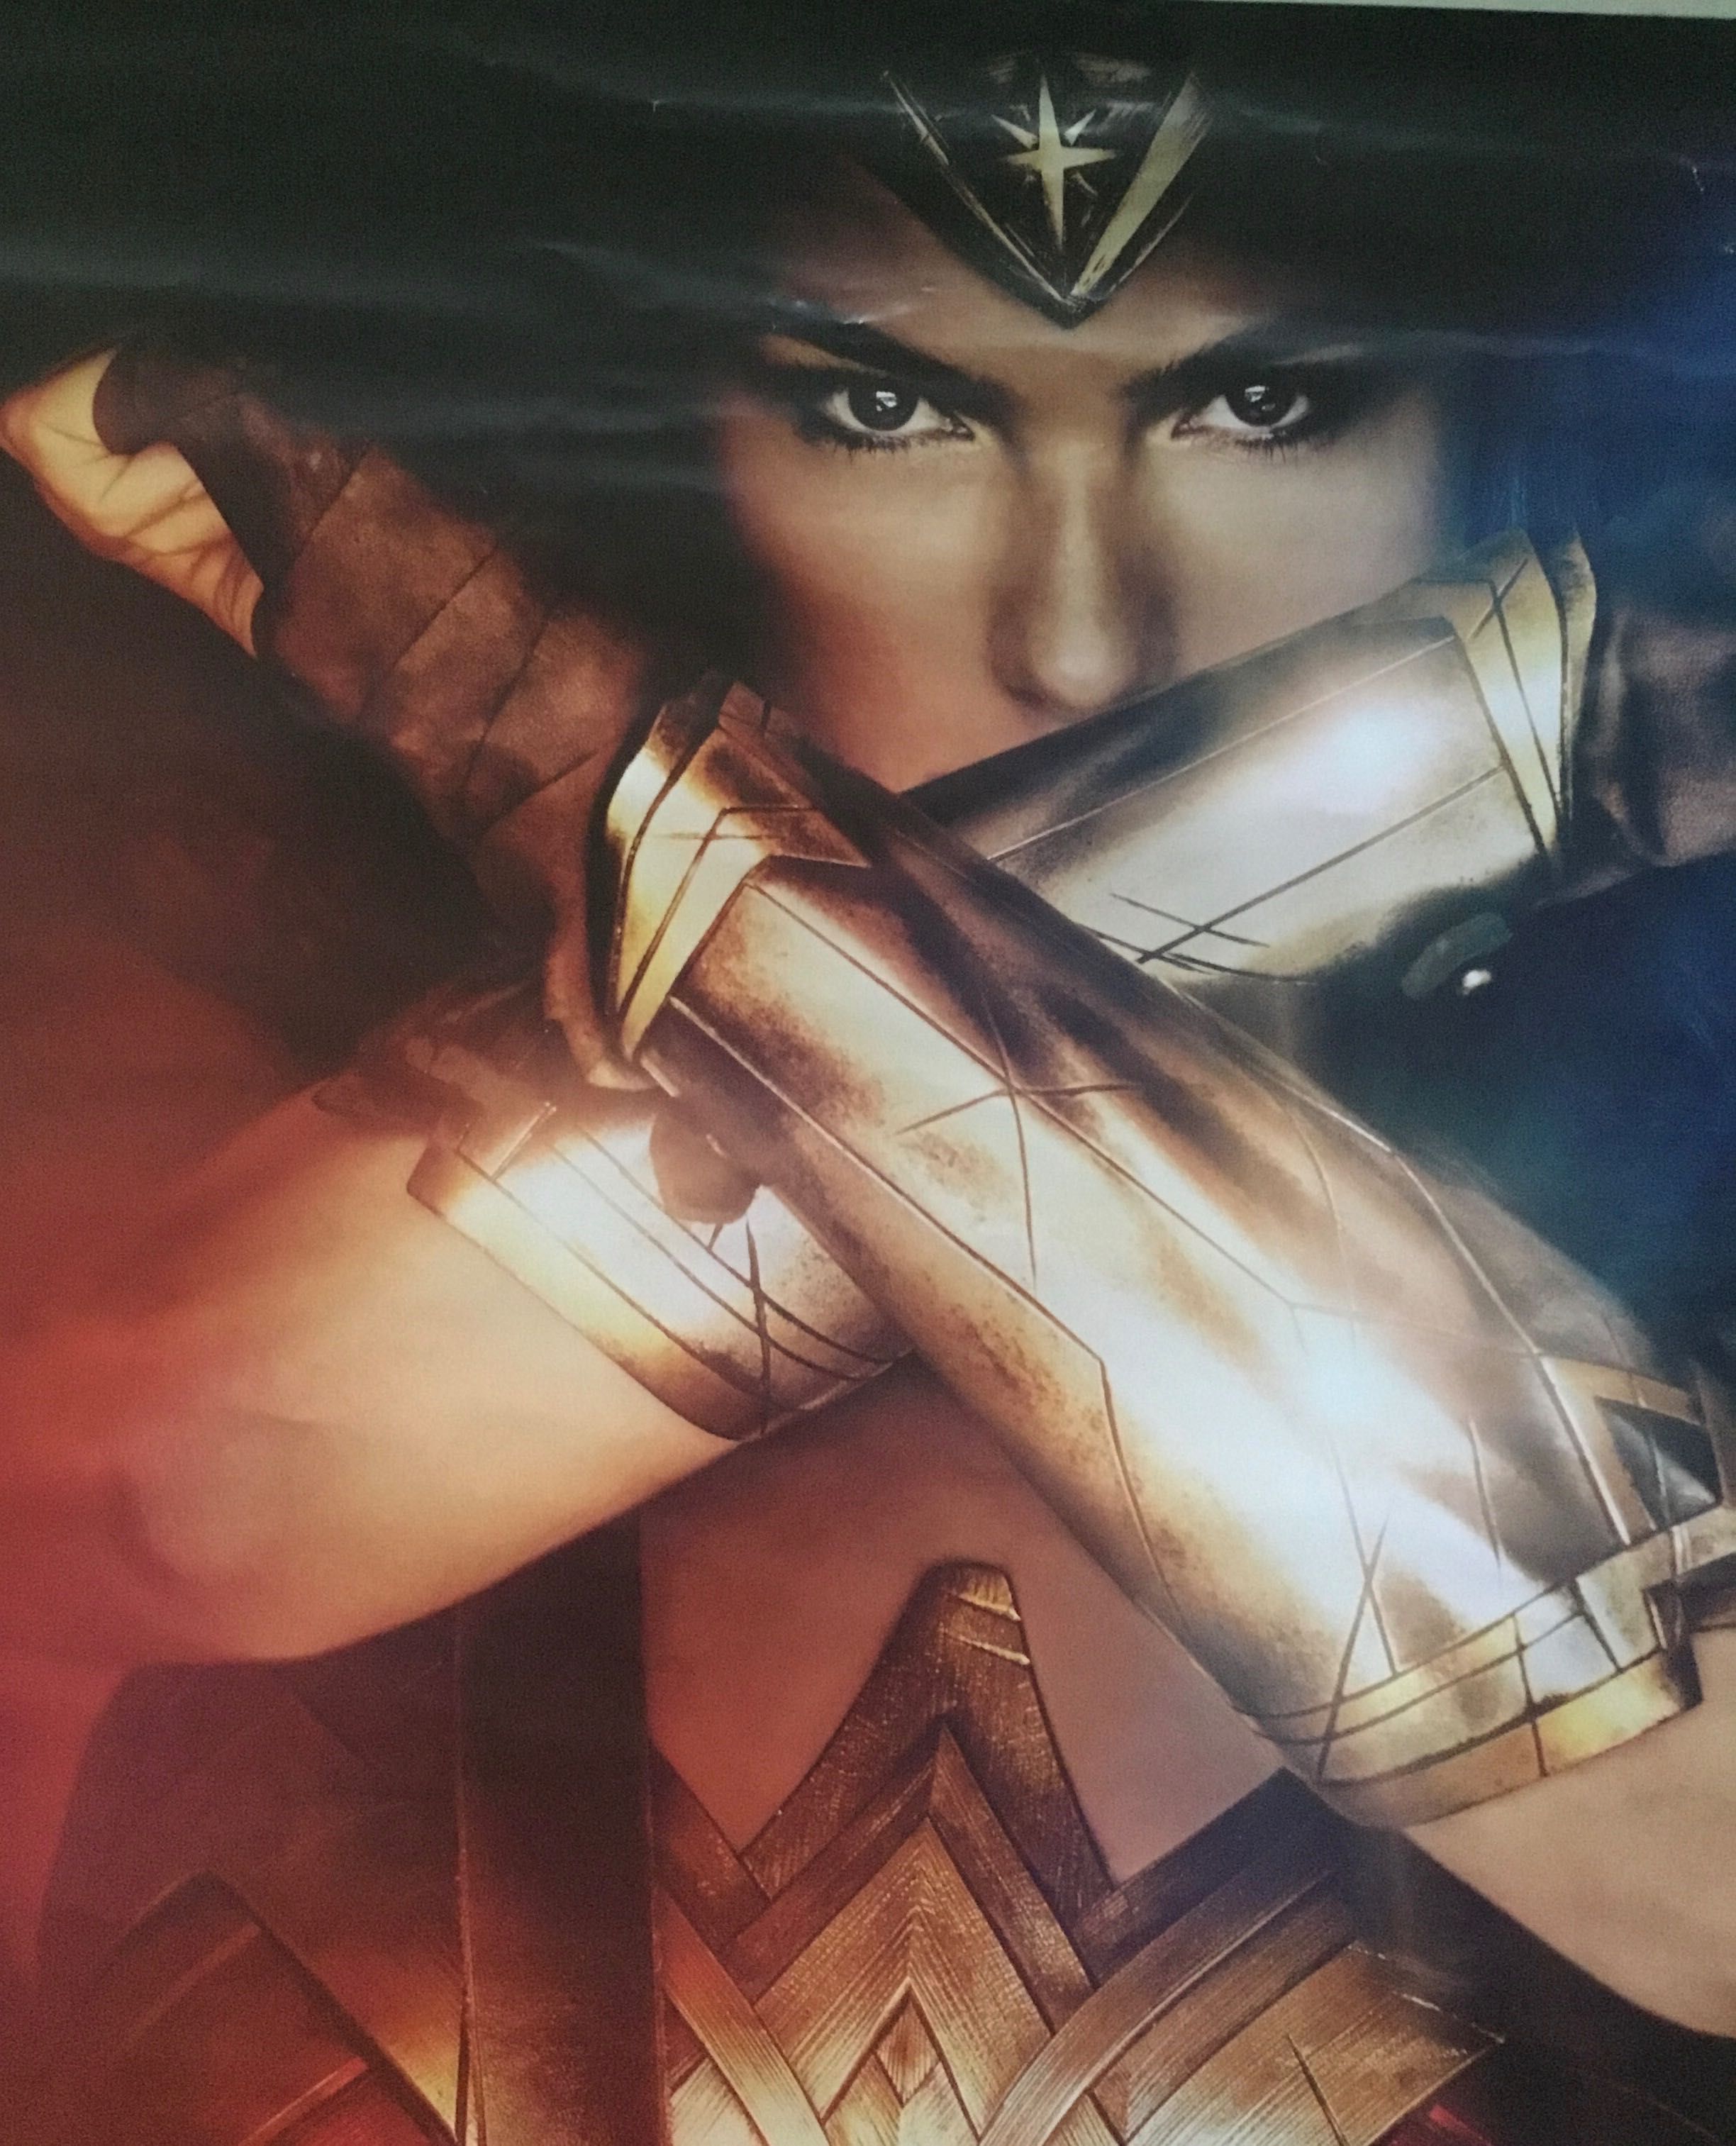 Plakat filmowy  Wonder Woman